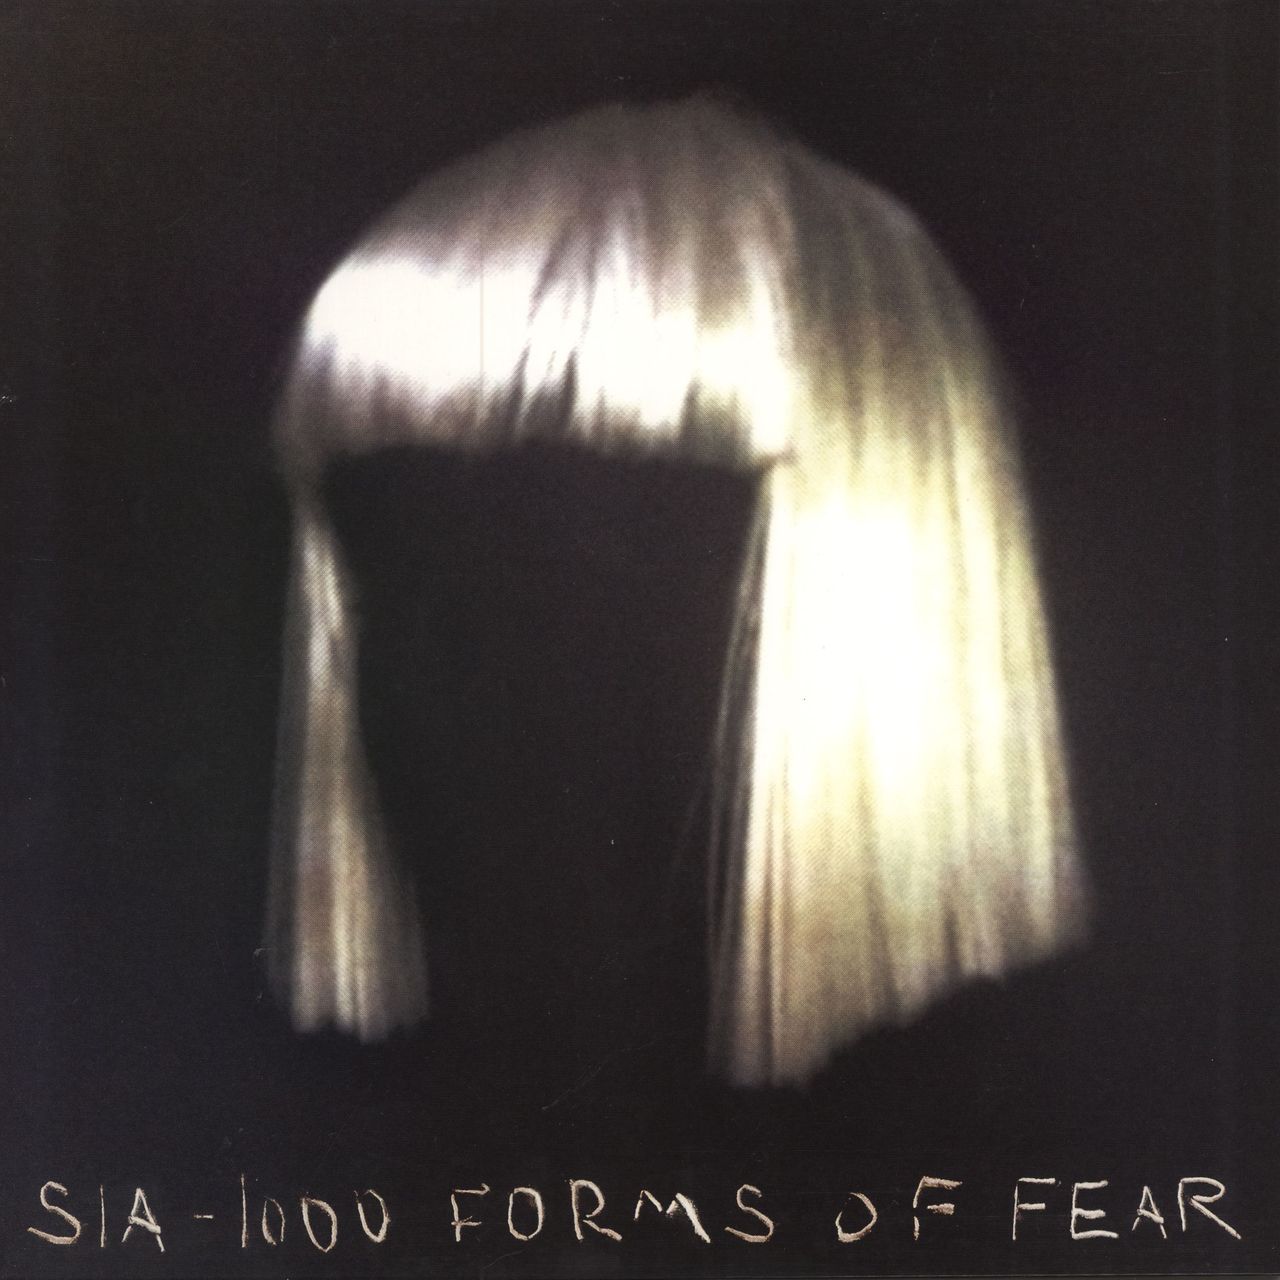 Sia 1000 Forms of Fear UK vinyl LP album (LP record) 88843-07404-1